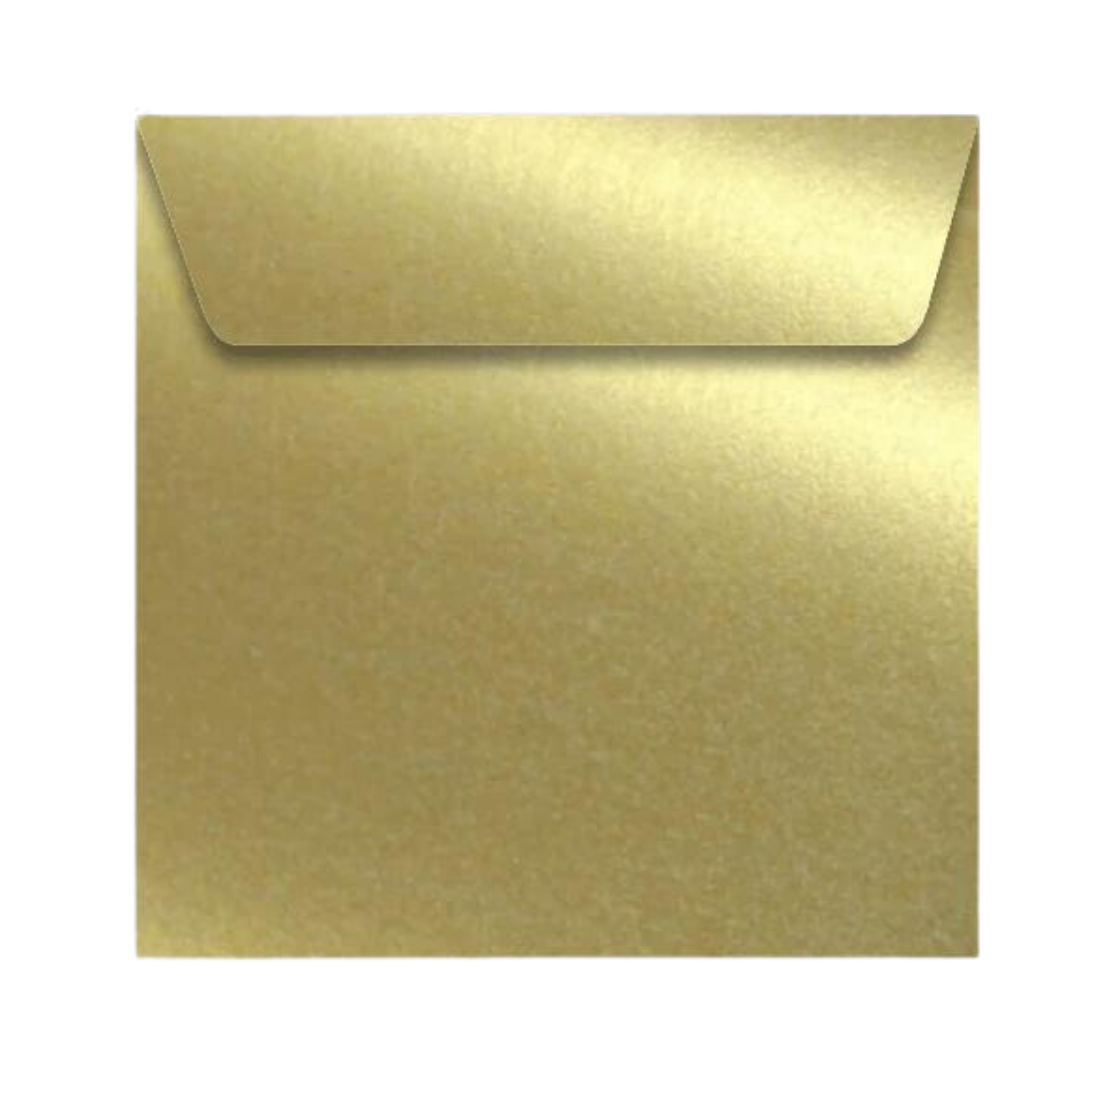 Envelope Majestic Luxus Real Gold 17X17cm Favini